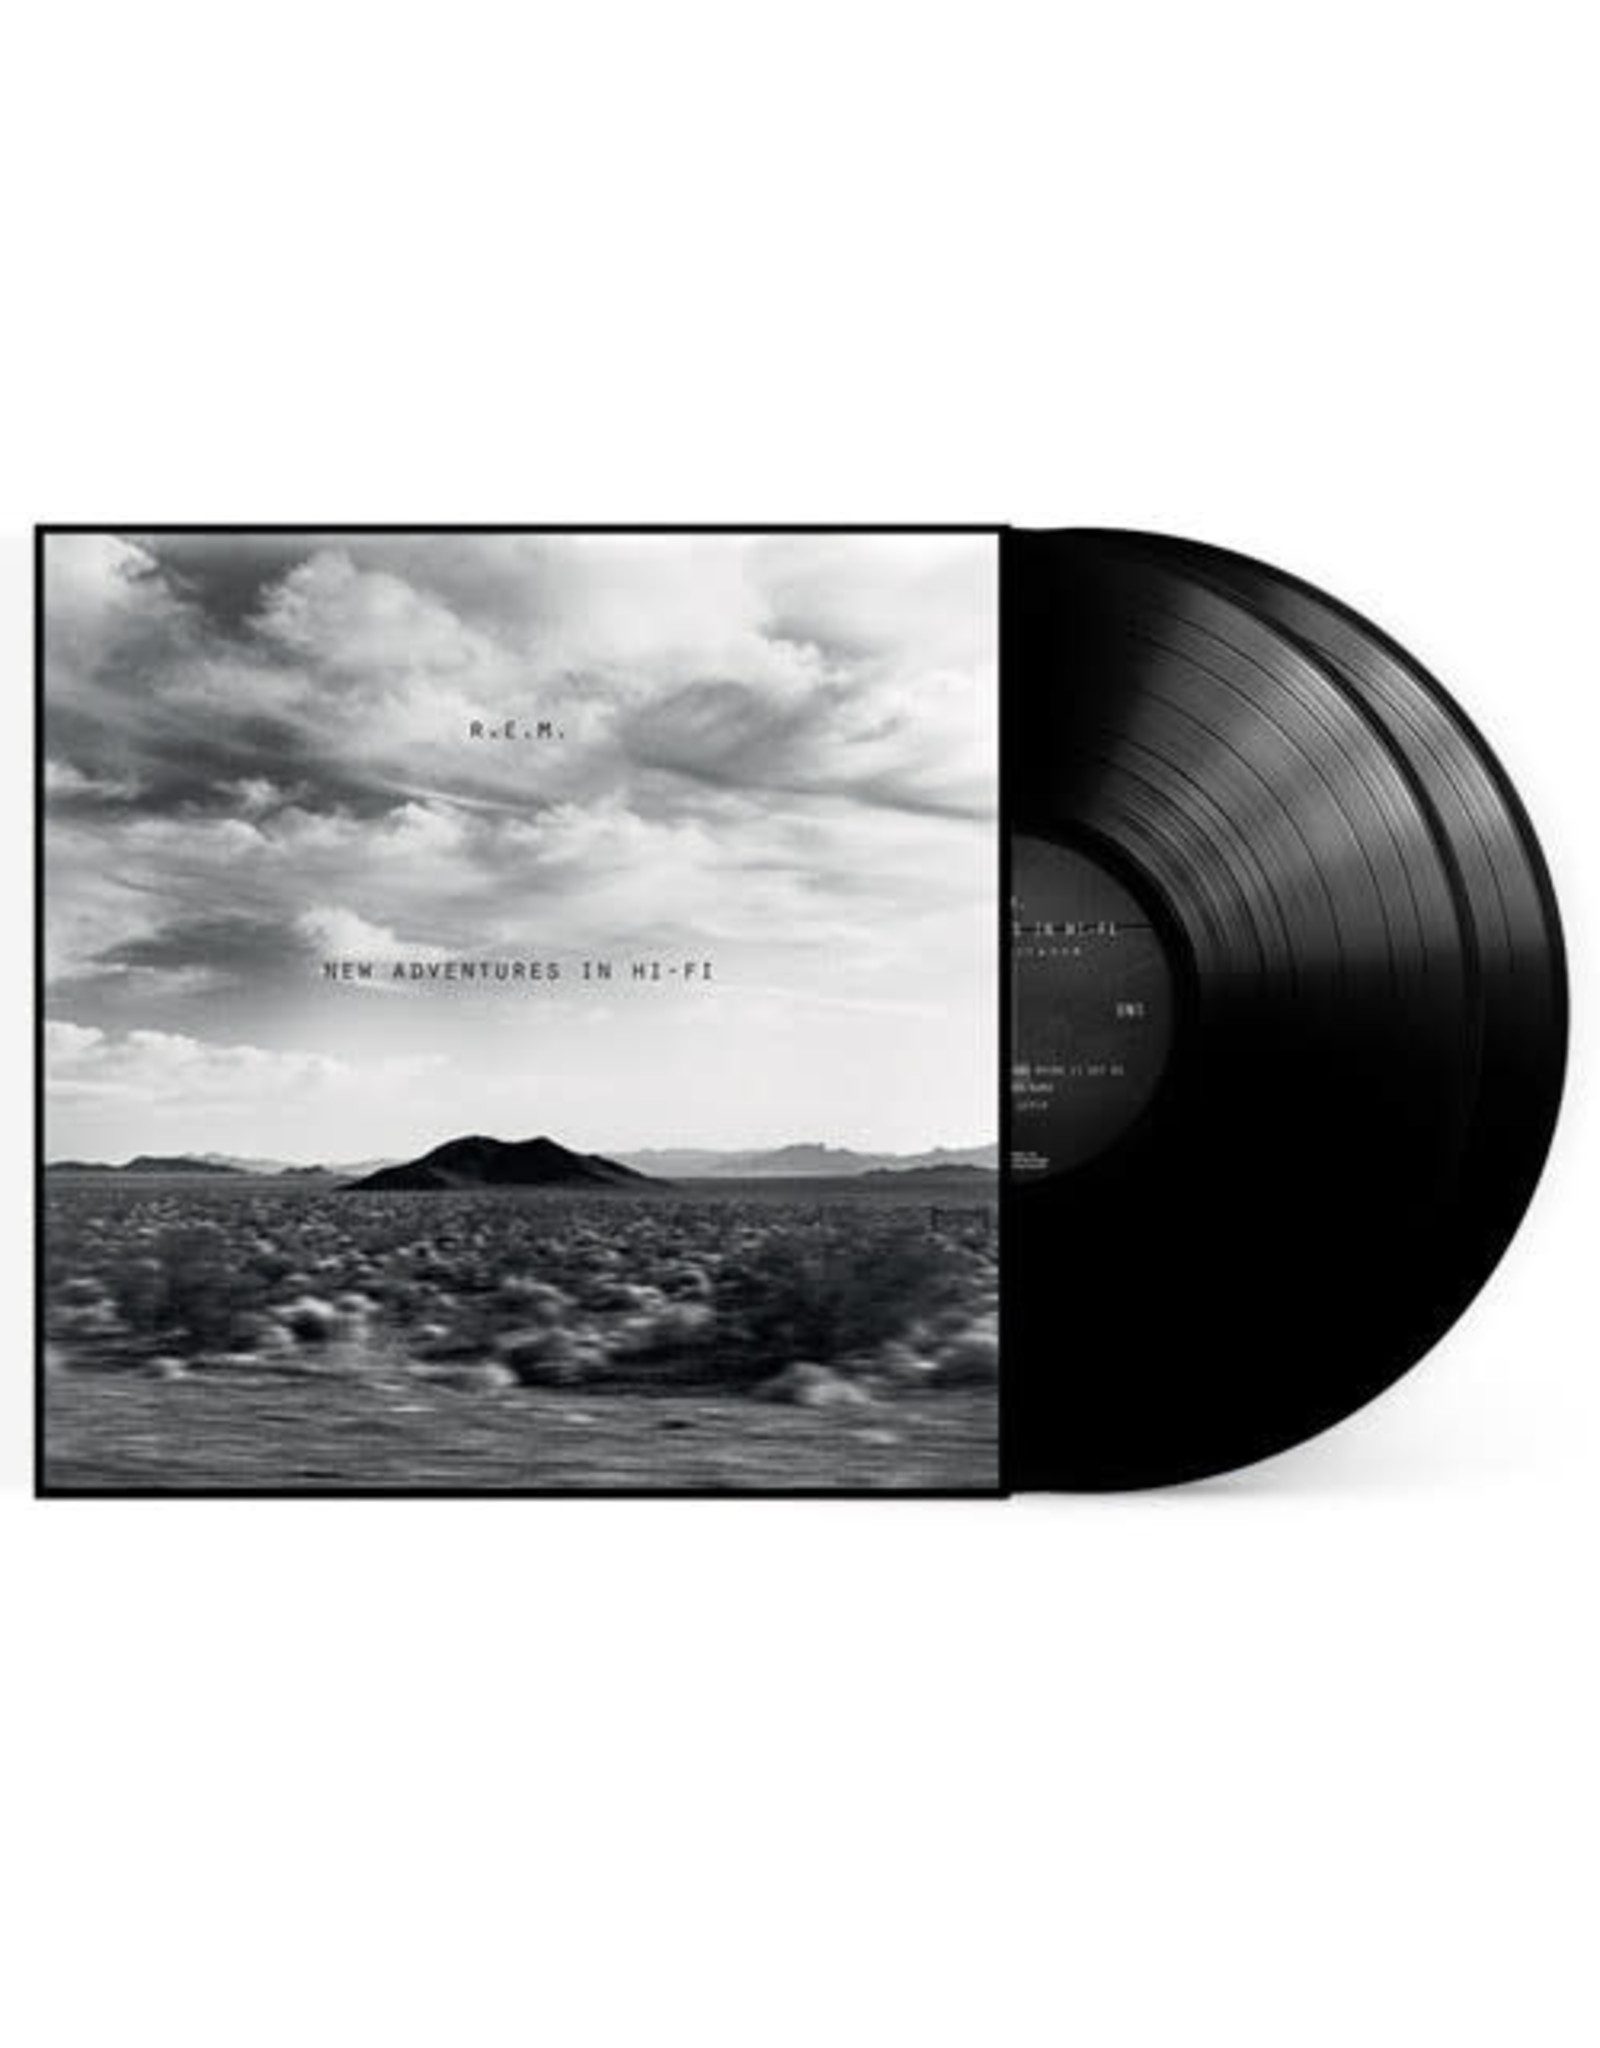 New Vinyl R.E.M. - New Adventures In Hi-Fi (25th Anniversary Edition) 2LP